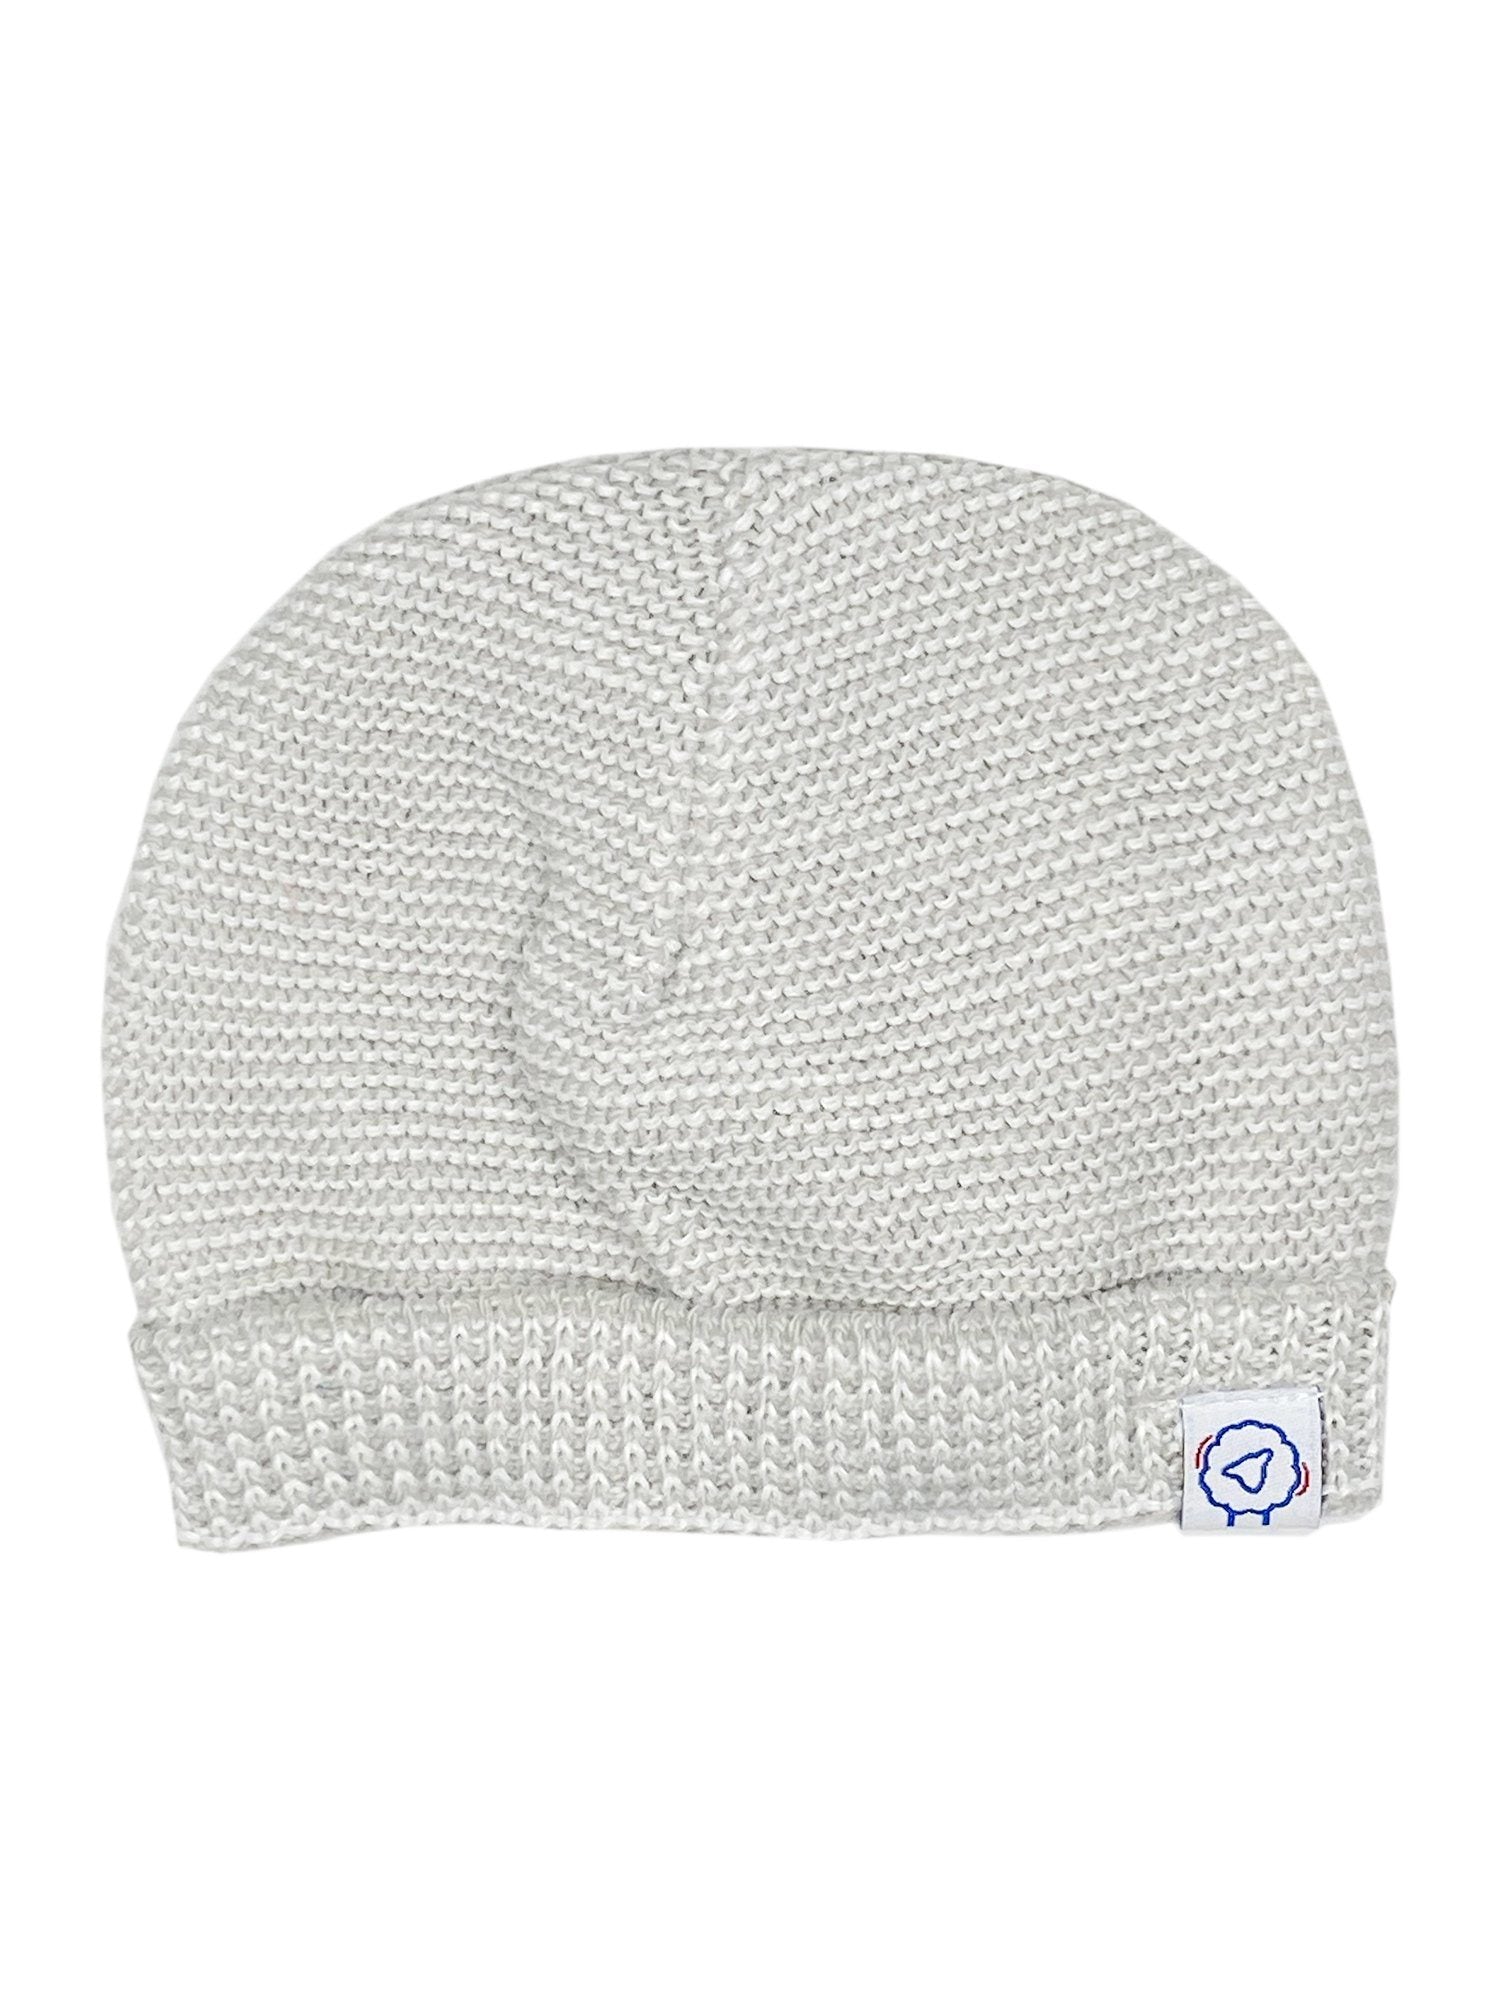 Knitted Hat, Grey Hat La Manufacture de Layette 